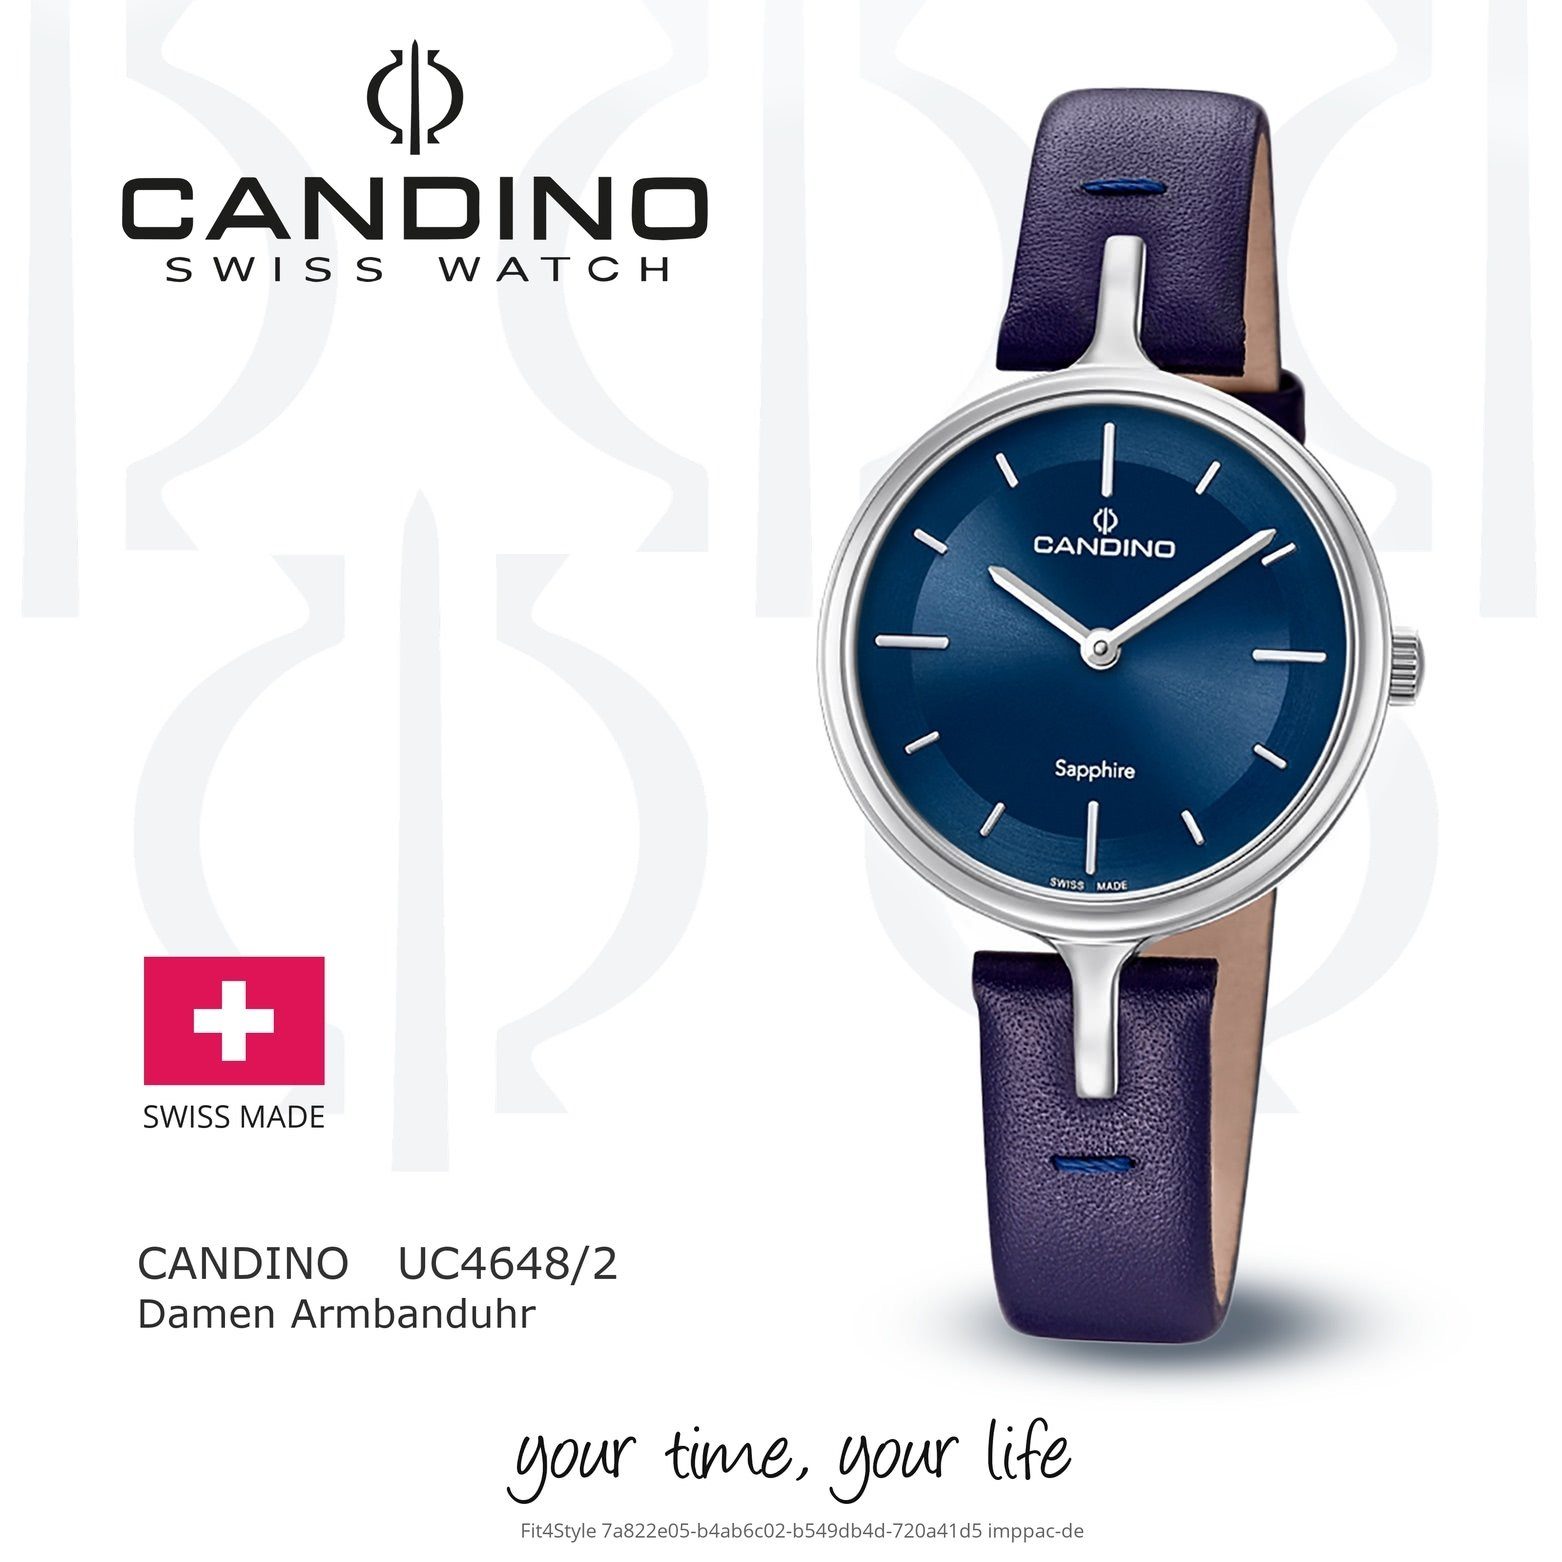 Candino rund, Quarzuhr Damen Damen Armbanduhr Lederarmband Candino Quarzuhr blau, C4648/2, Fashion Analog